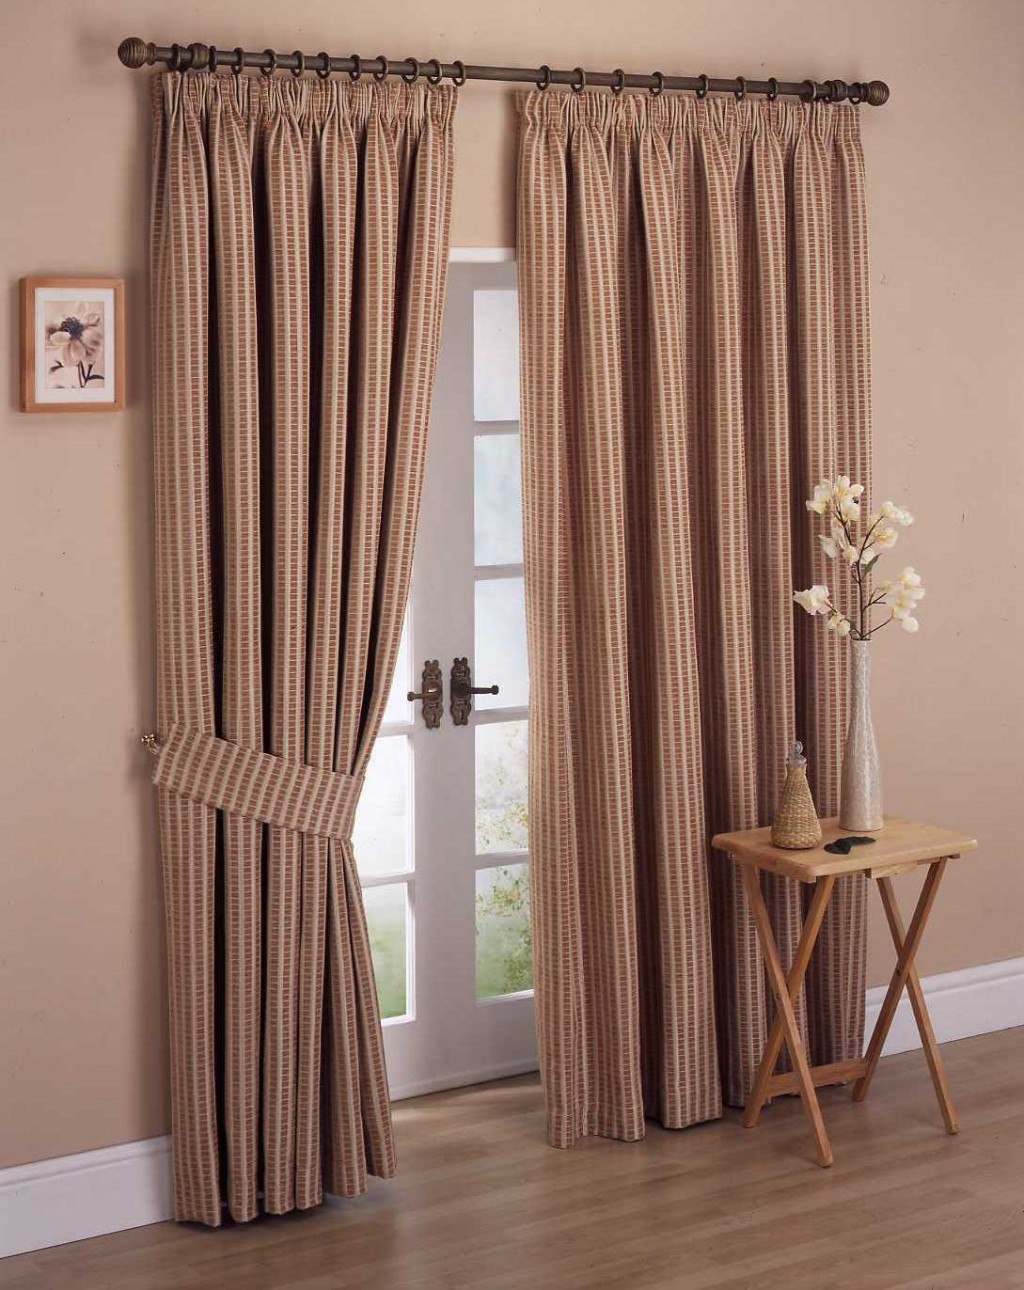 Curtain Catalogs in Curtain